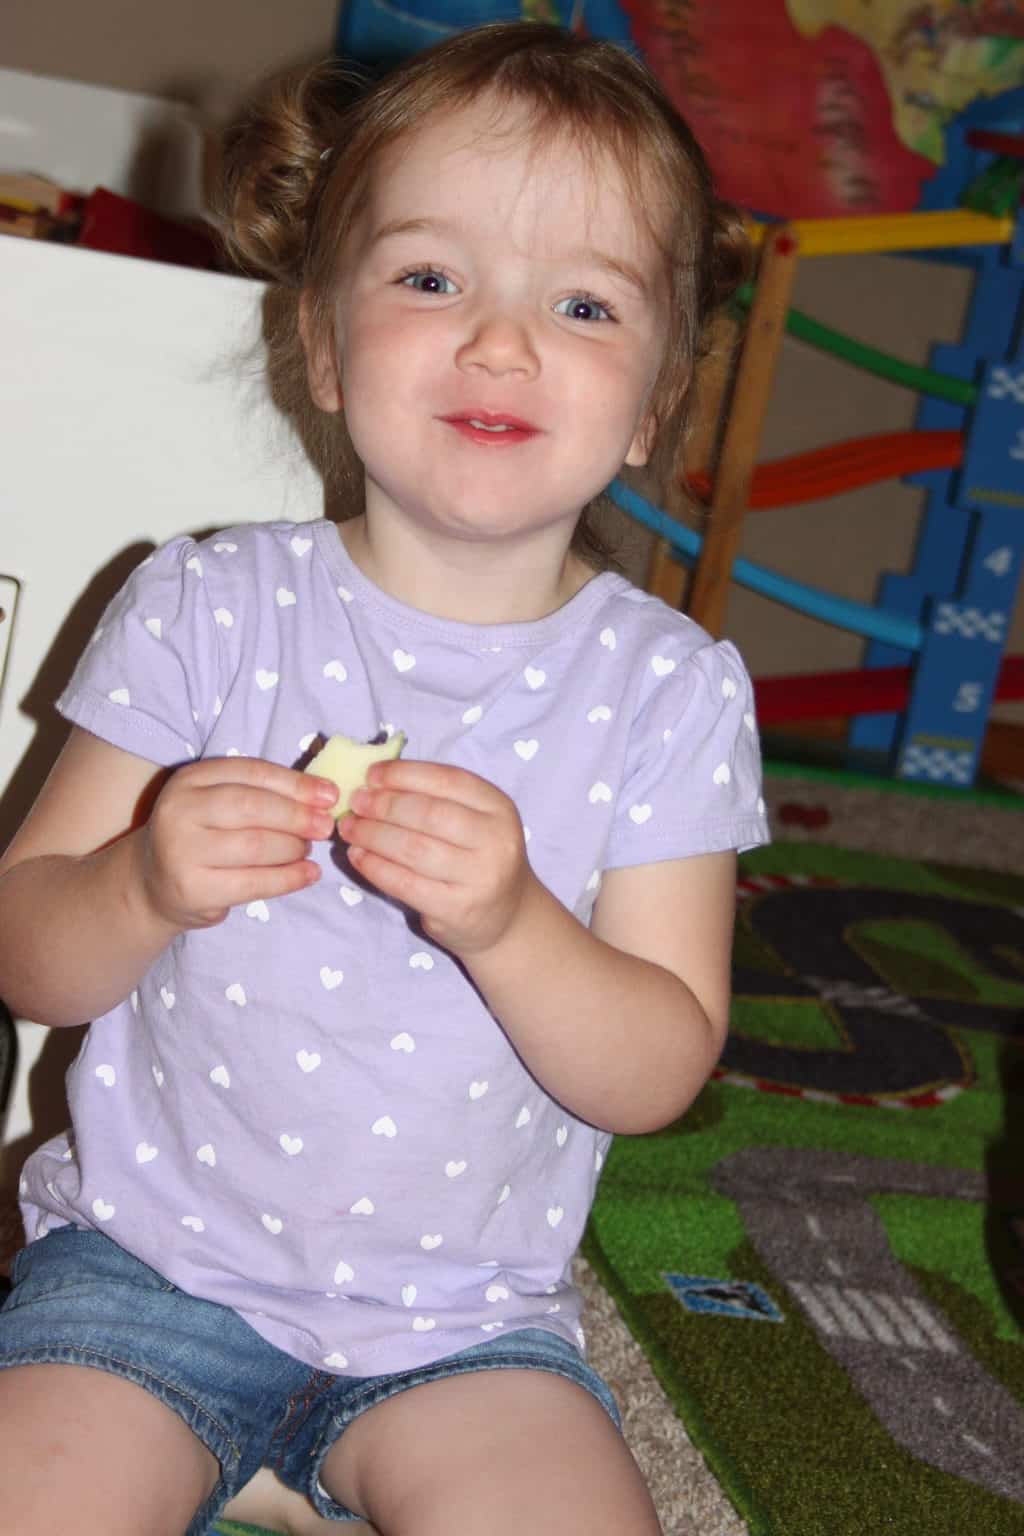 young girl eating an apple slice 